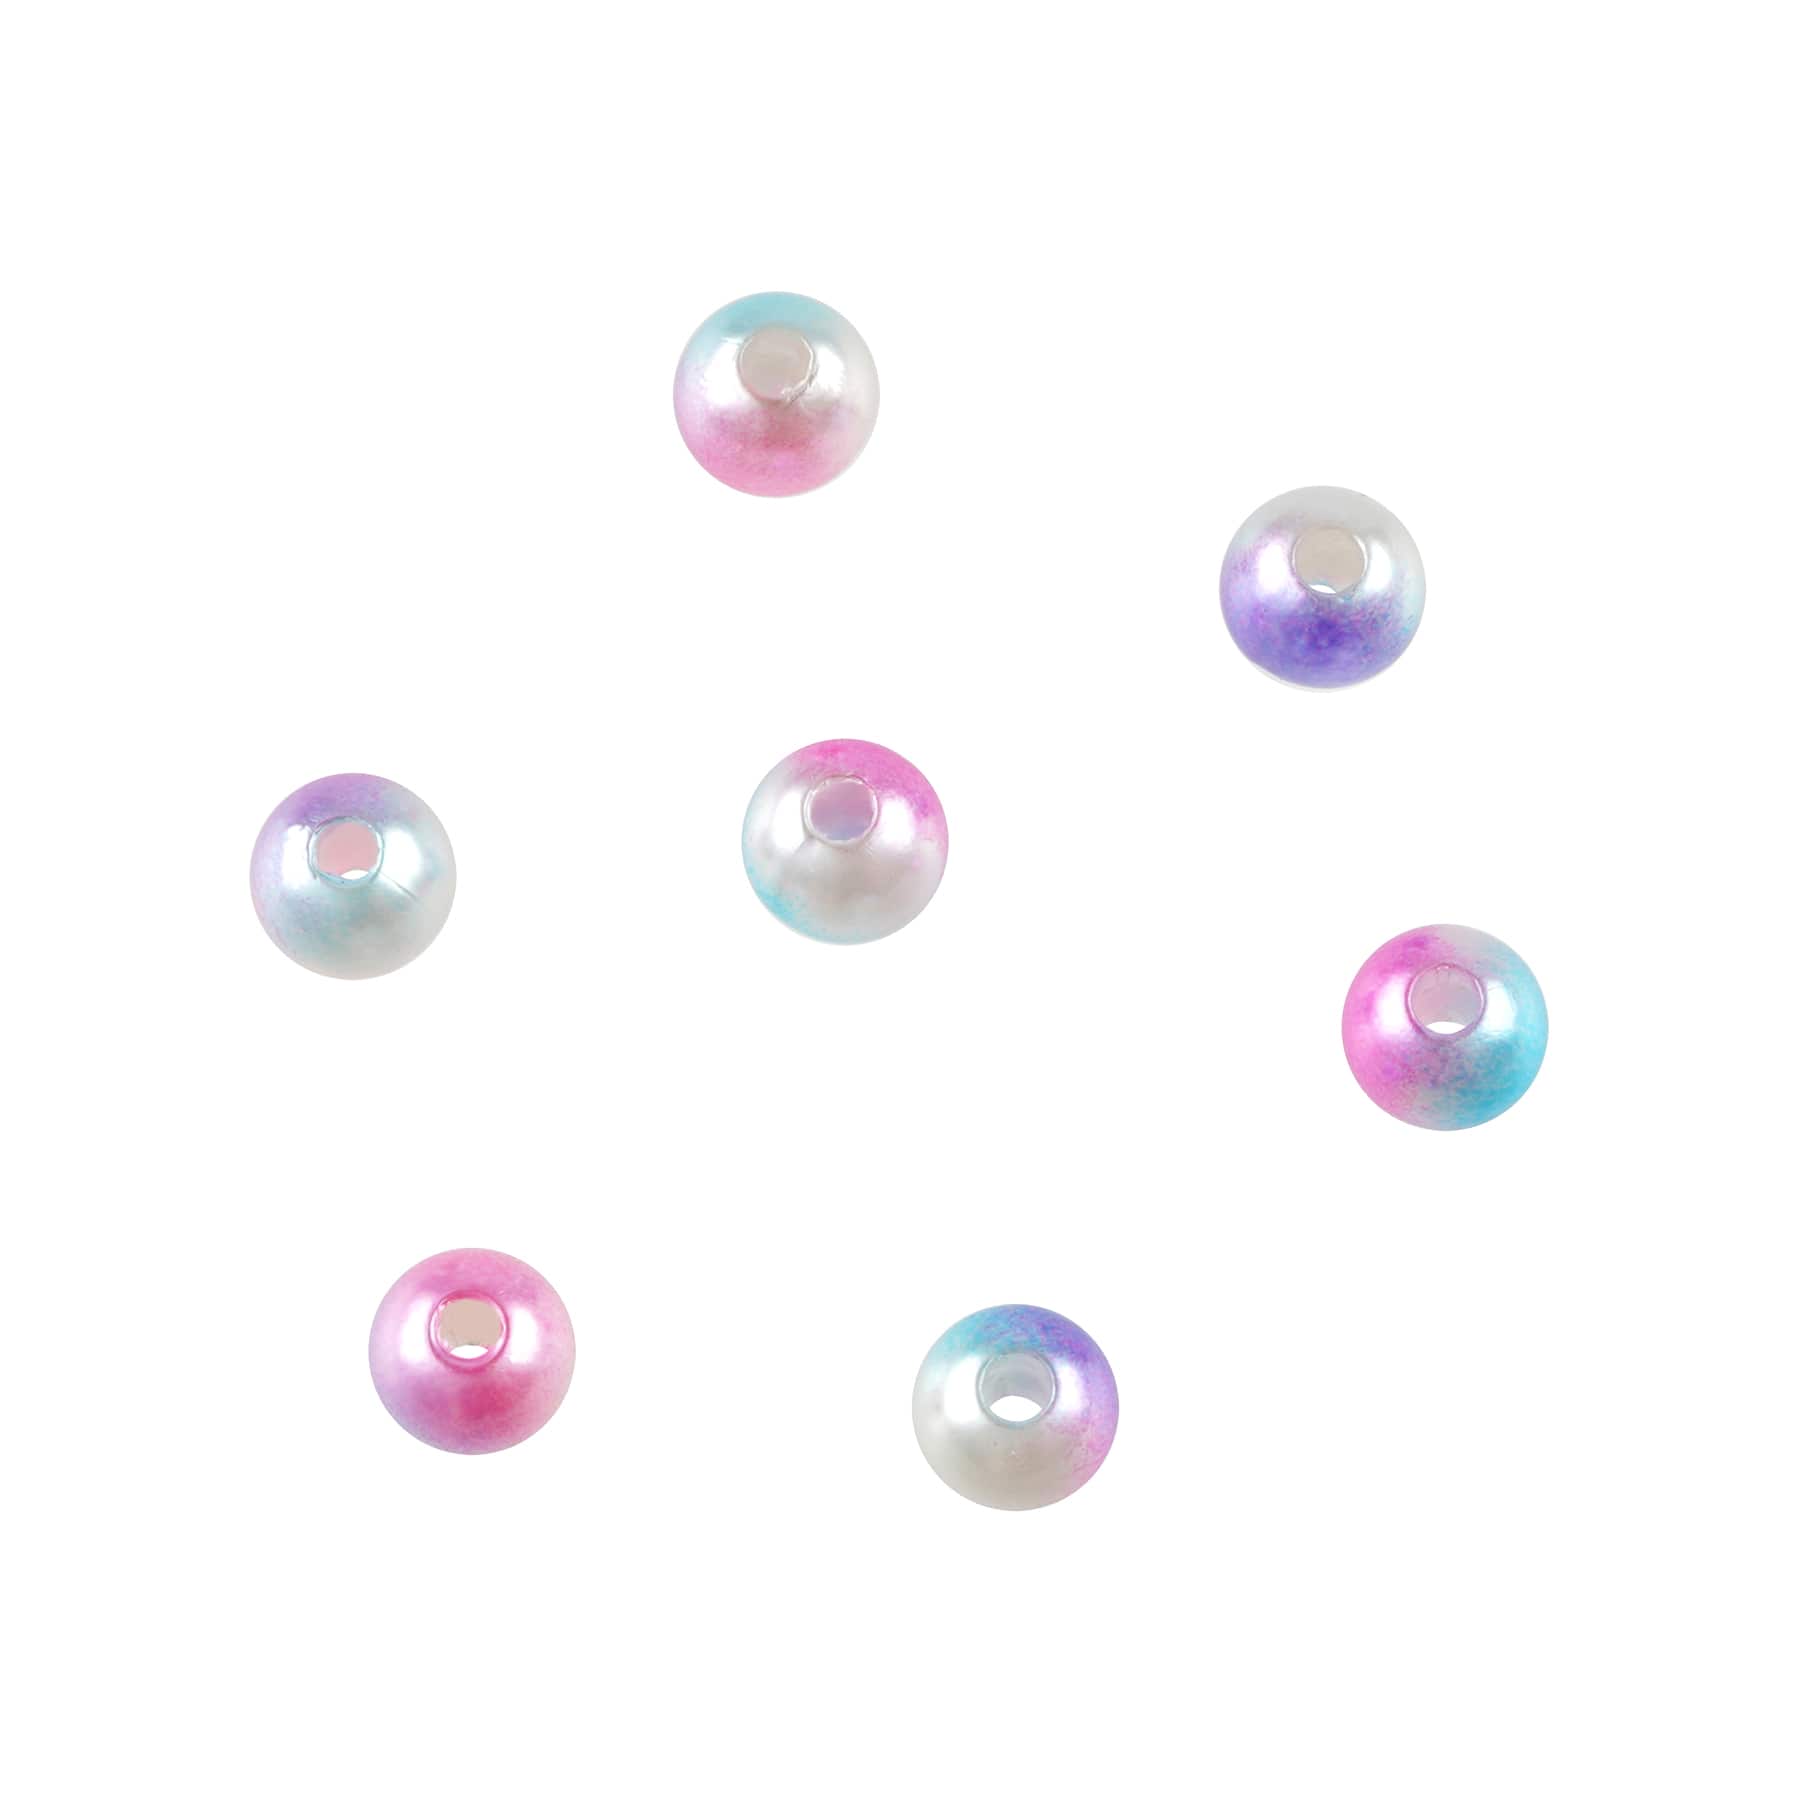 1/2lb. Mermaid Pearl Beads by Creatology™